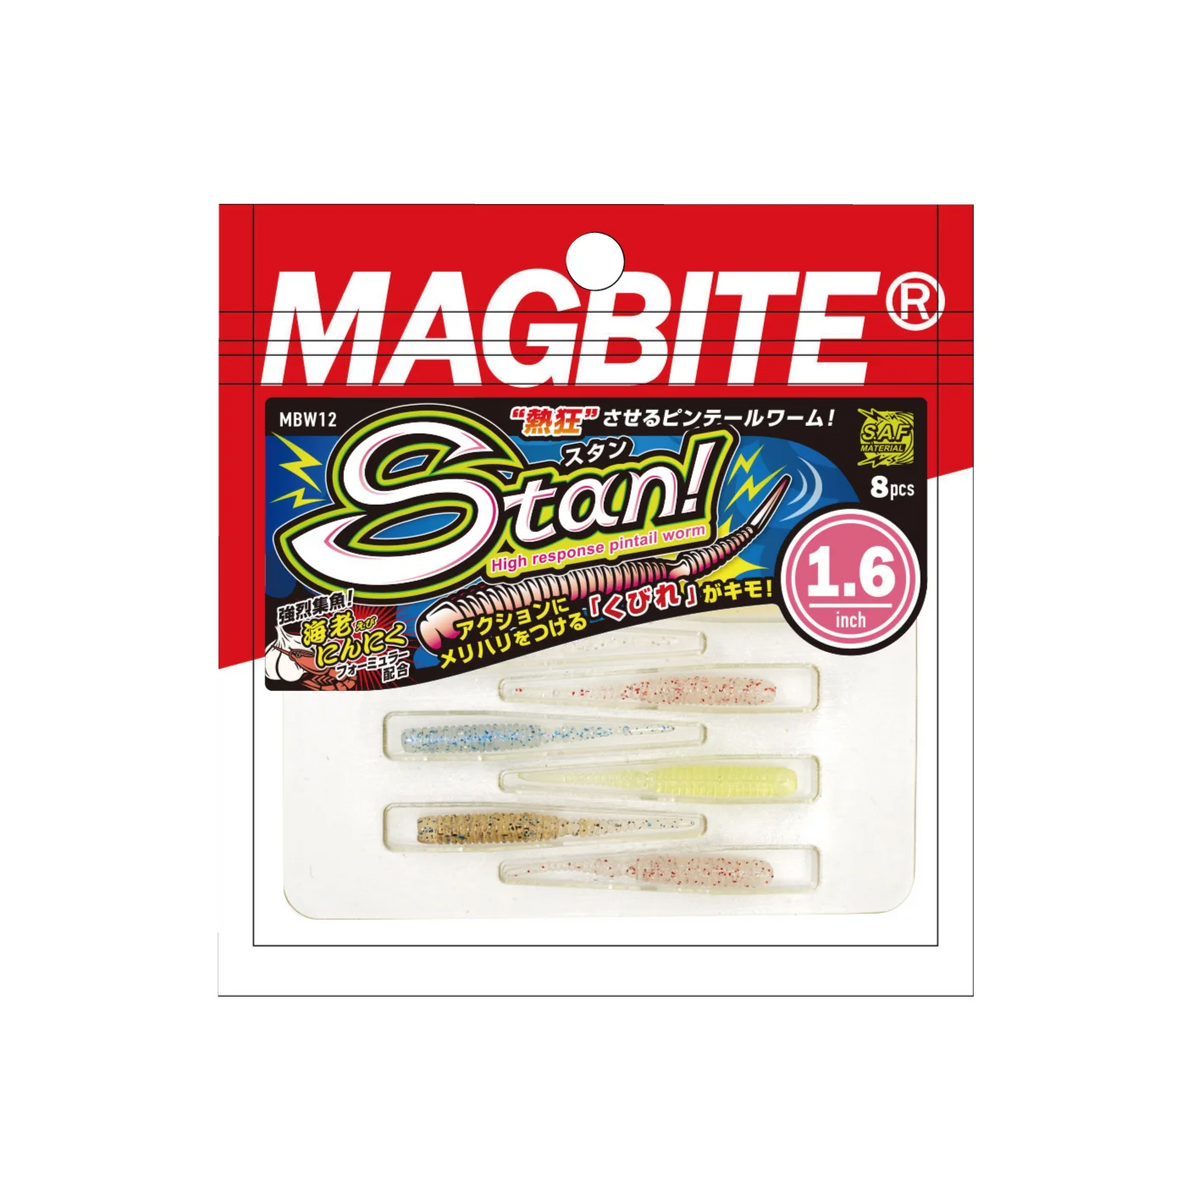 MAGBITE Soft Plastic Worm Stan 1.6 inch